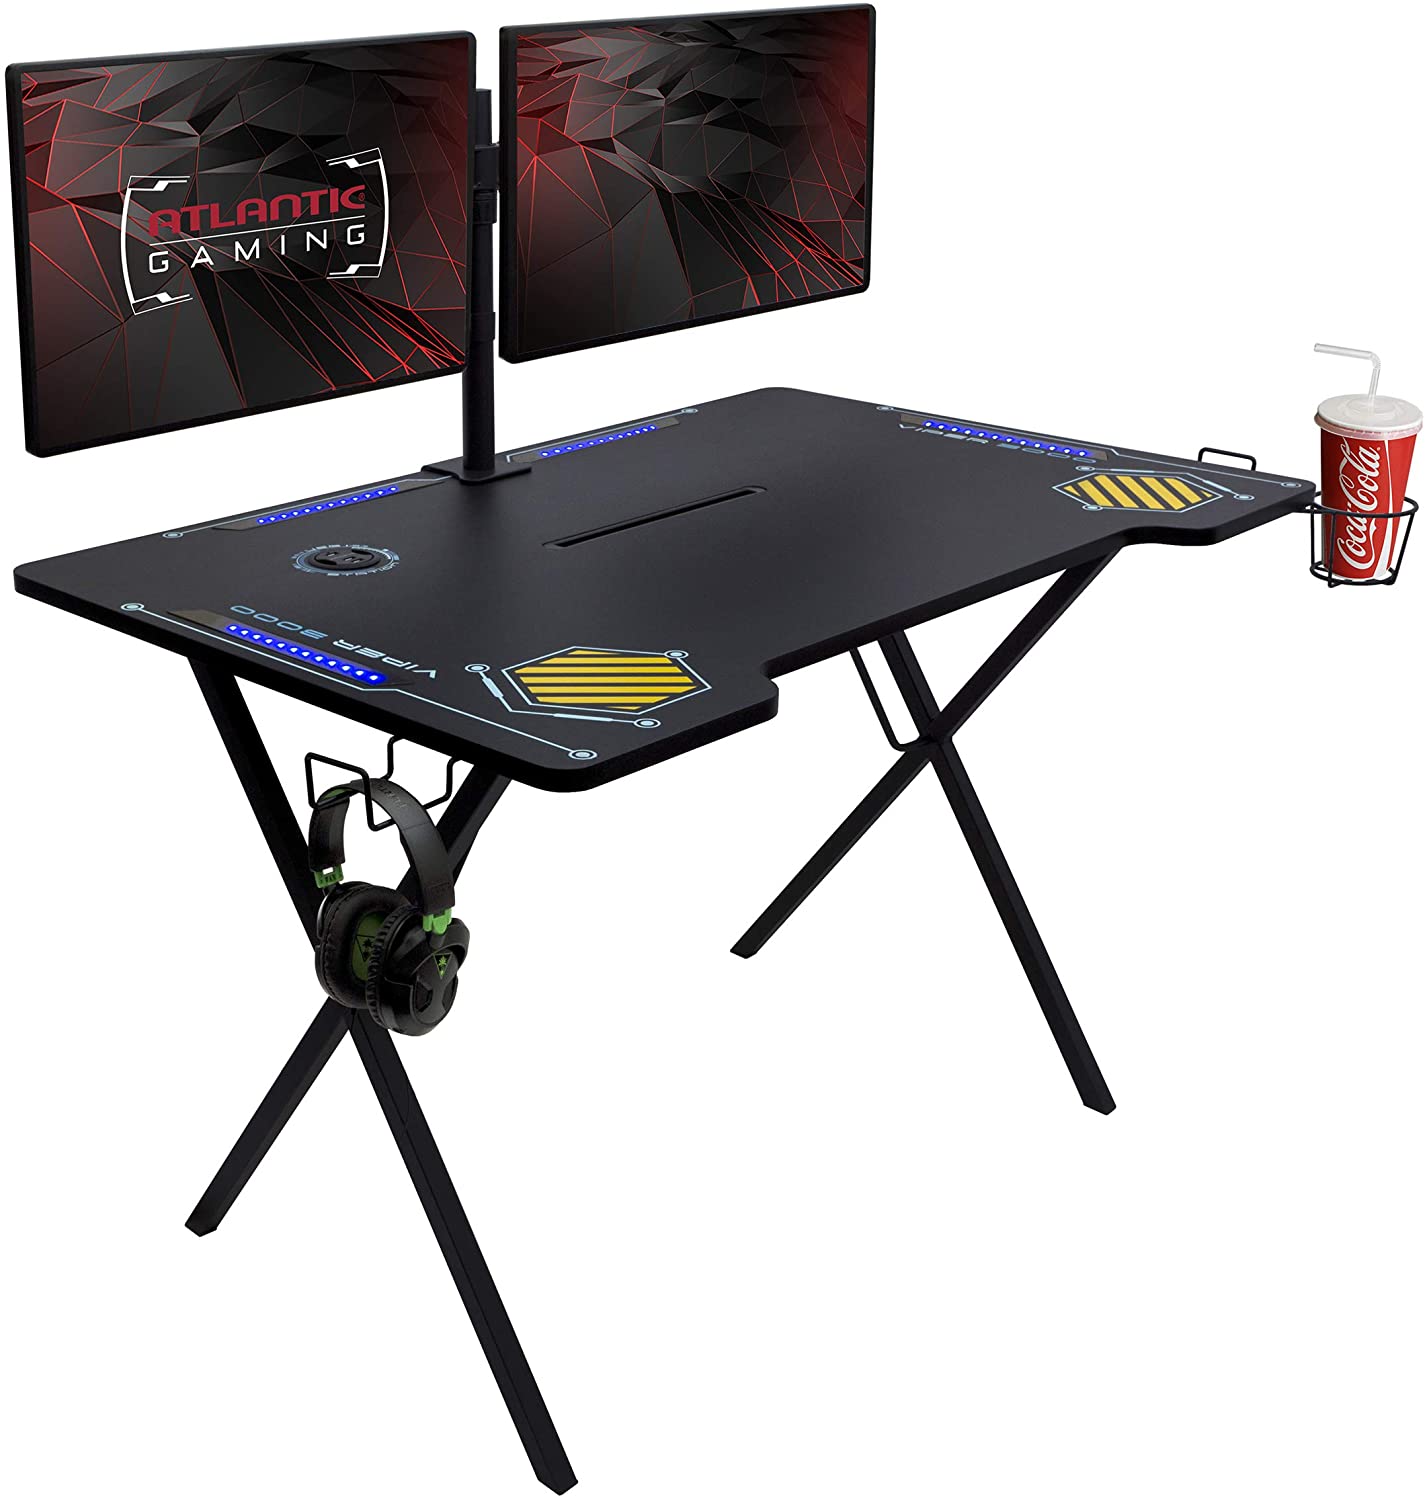 Atlantic Viper 3000 Gaming Desk w/ LED Lights $72.40 + Free Shipping